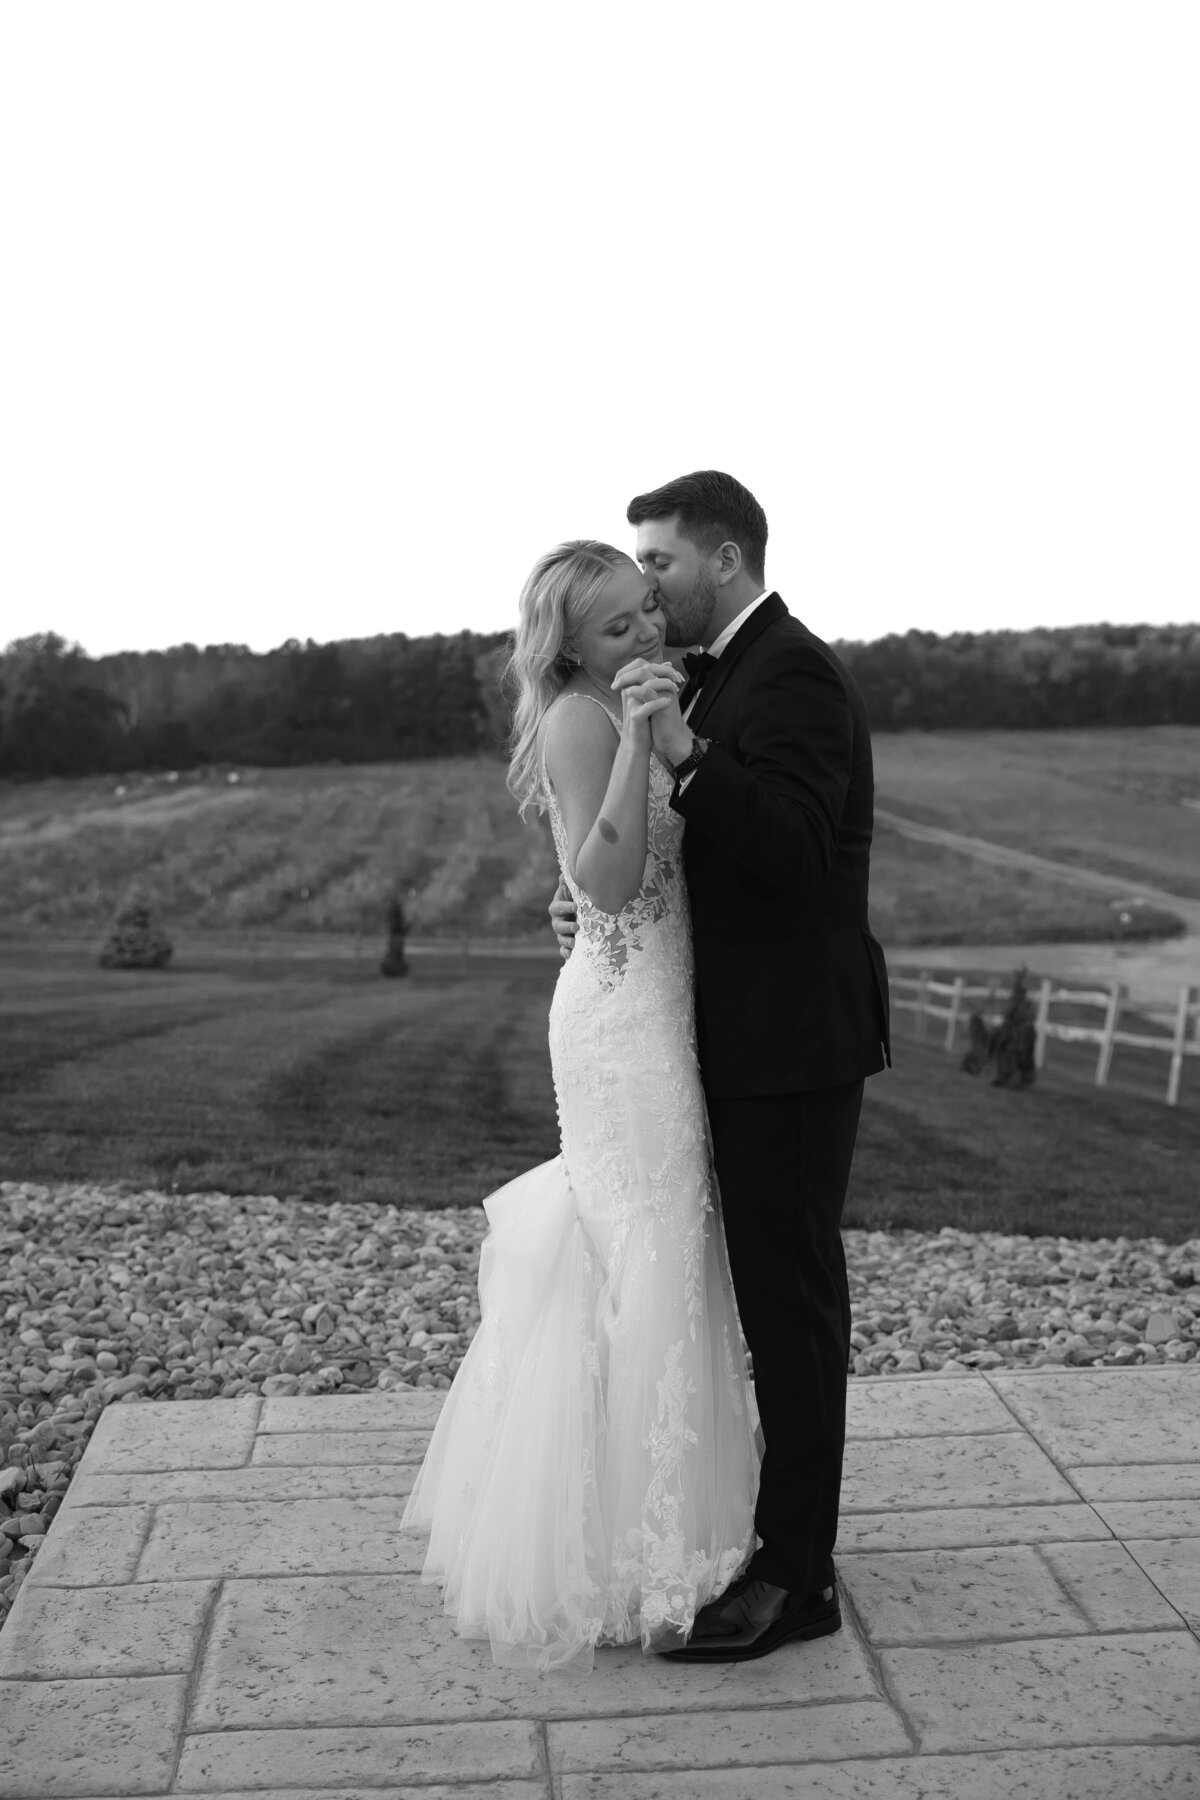 Kearston Smith Photos - Cleveland Wedding Photographer